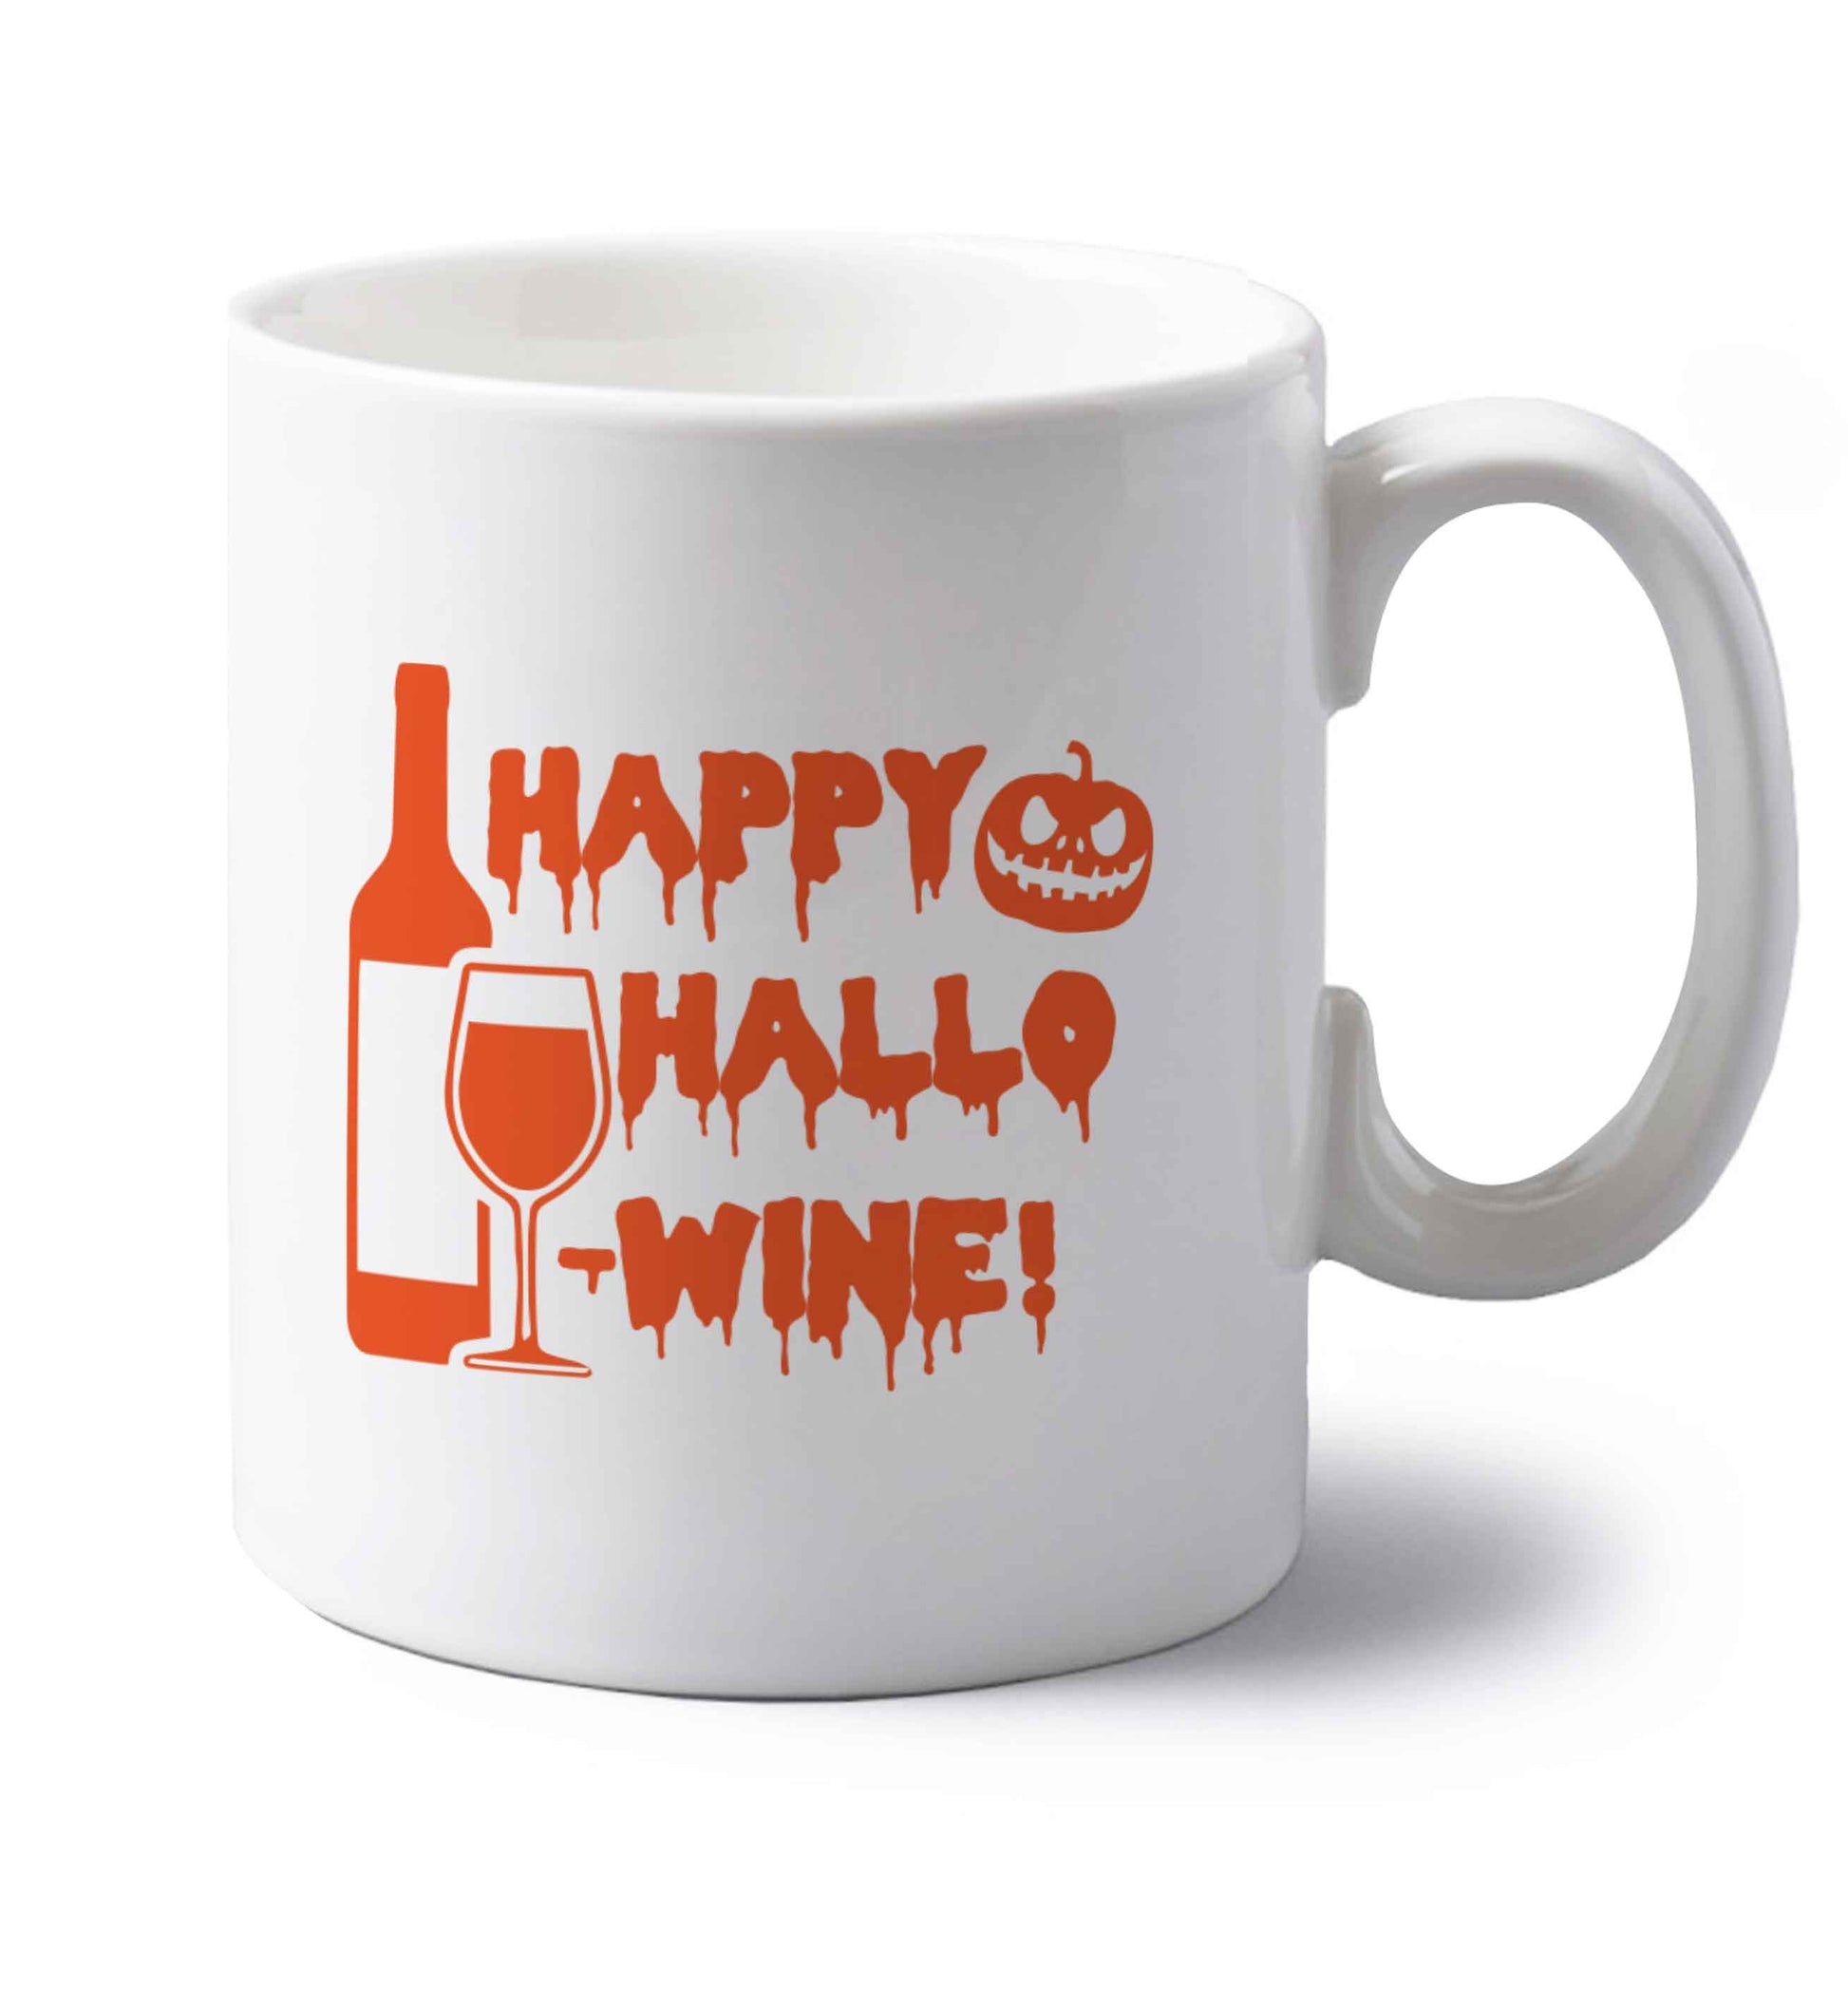 Happy hallow-wine left handed white ceramic mug 